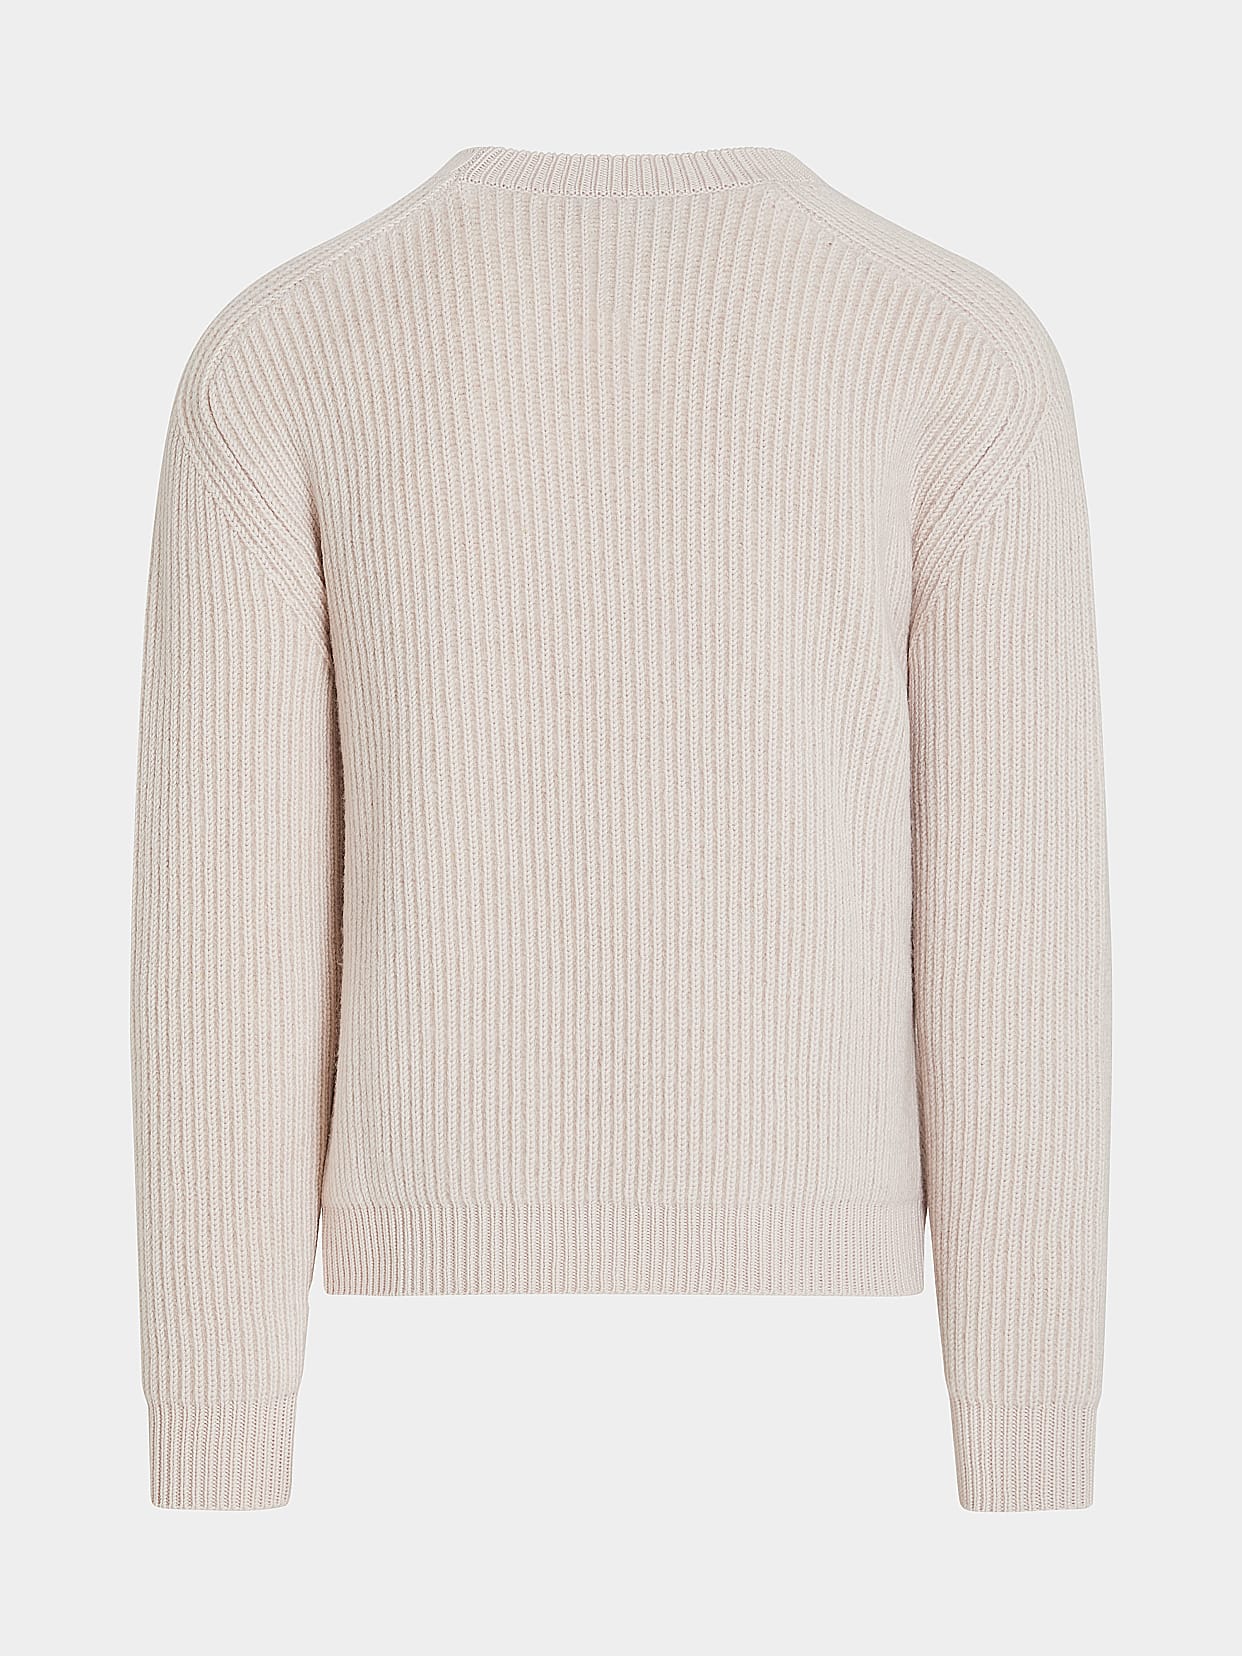 Chunky Knit Merino Wool Crewneck Sweater | FAAME V2.Y7.02 | Chalk